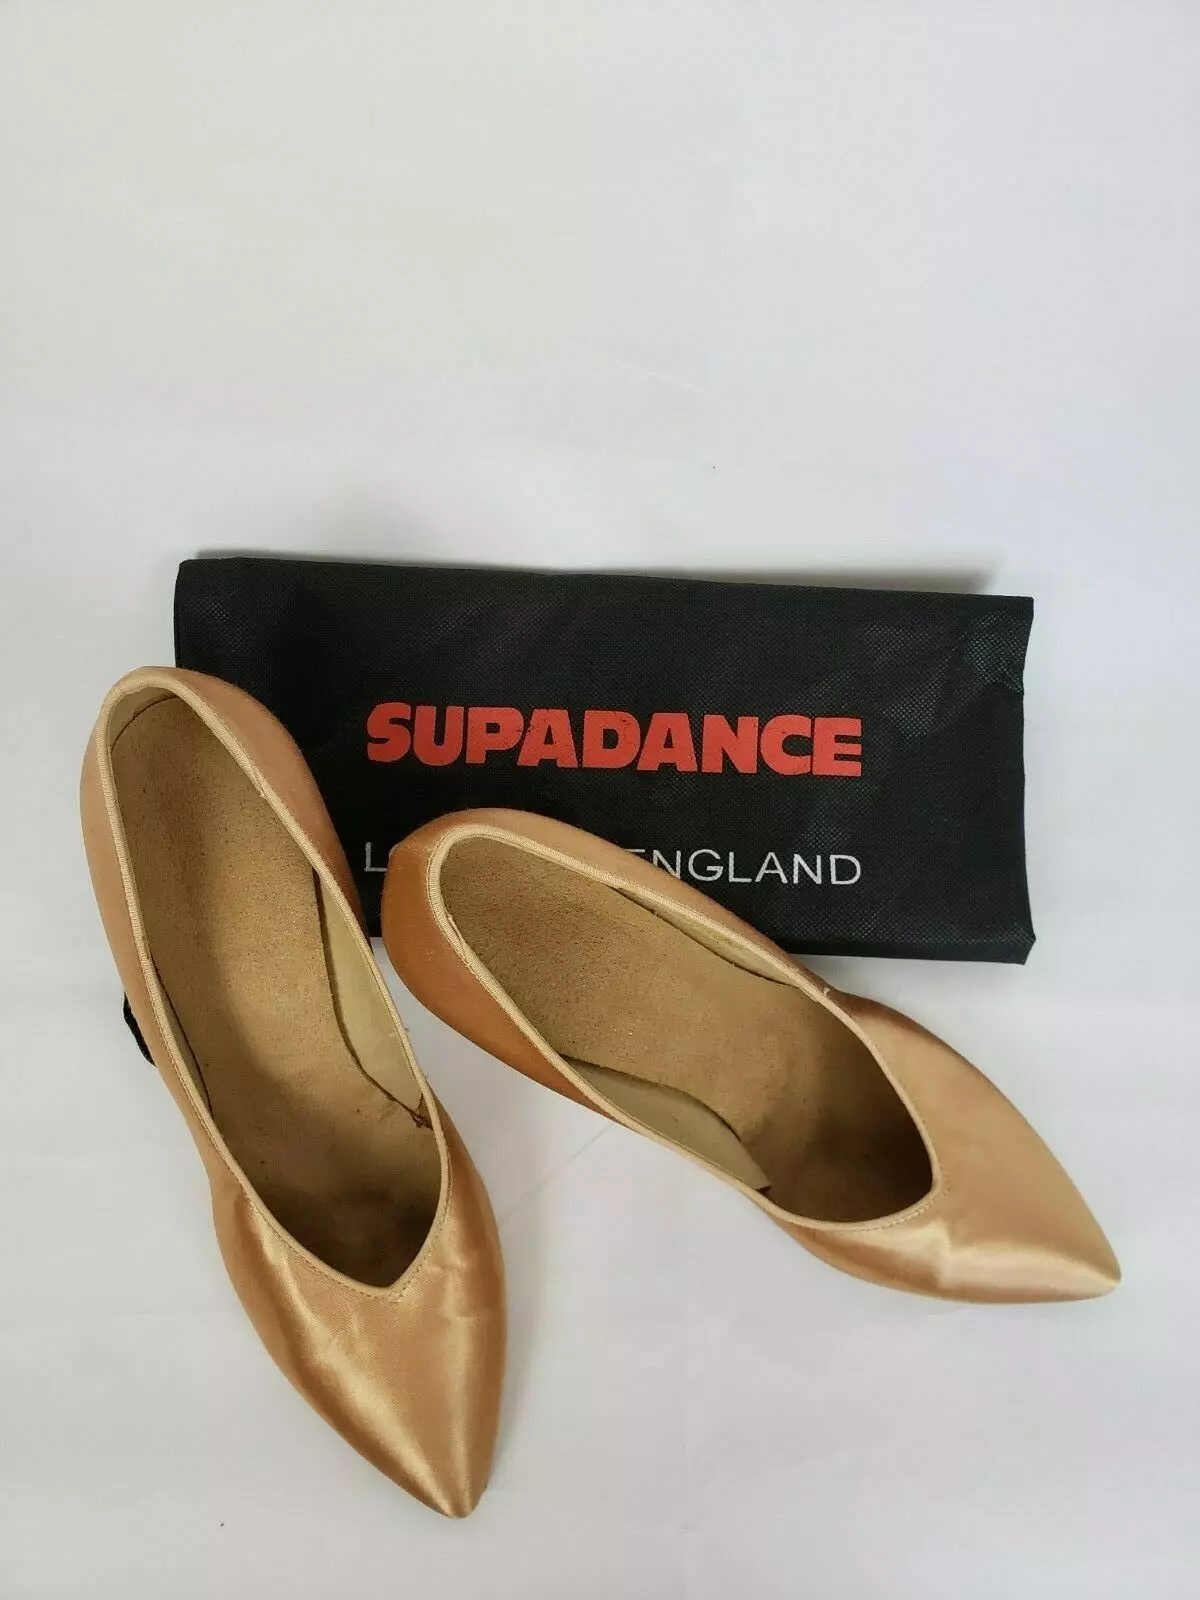 Plearty Dance Shoes: Ženske plesne cipele i dječje cipele za sportske i plesne plesne plesne dvorane. Modeli ocjenjivanja i njihove veličine 260_38